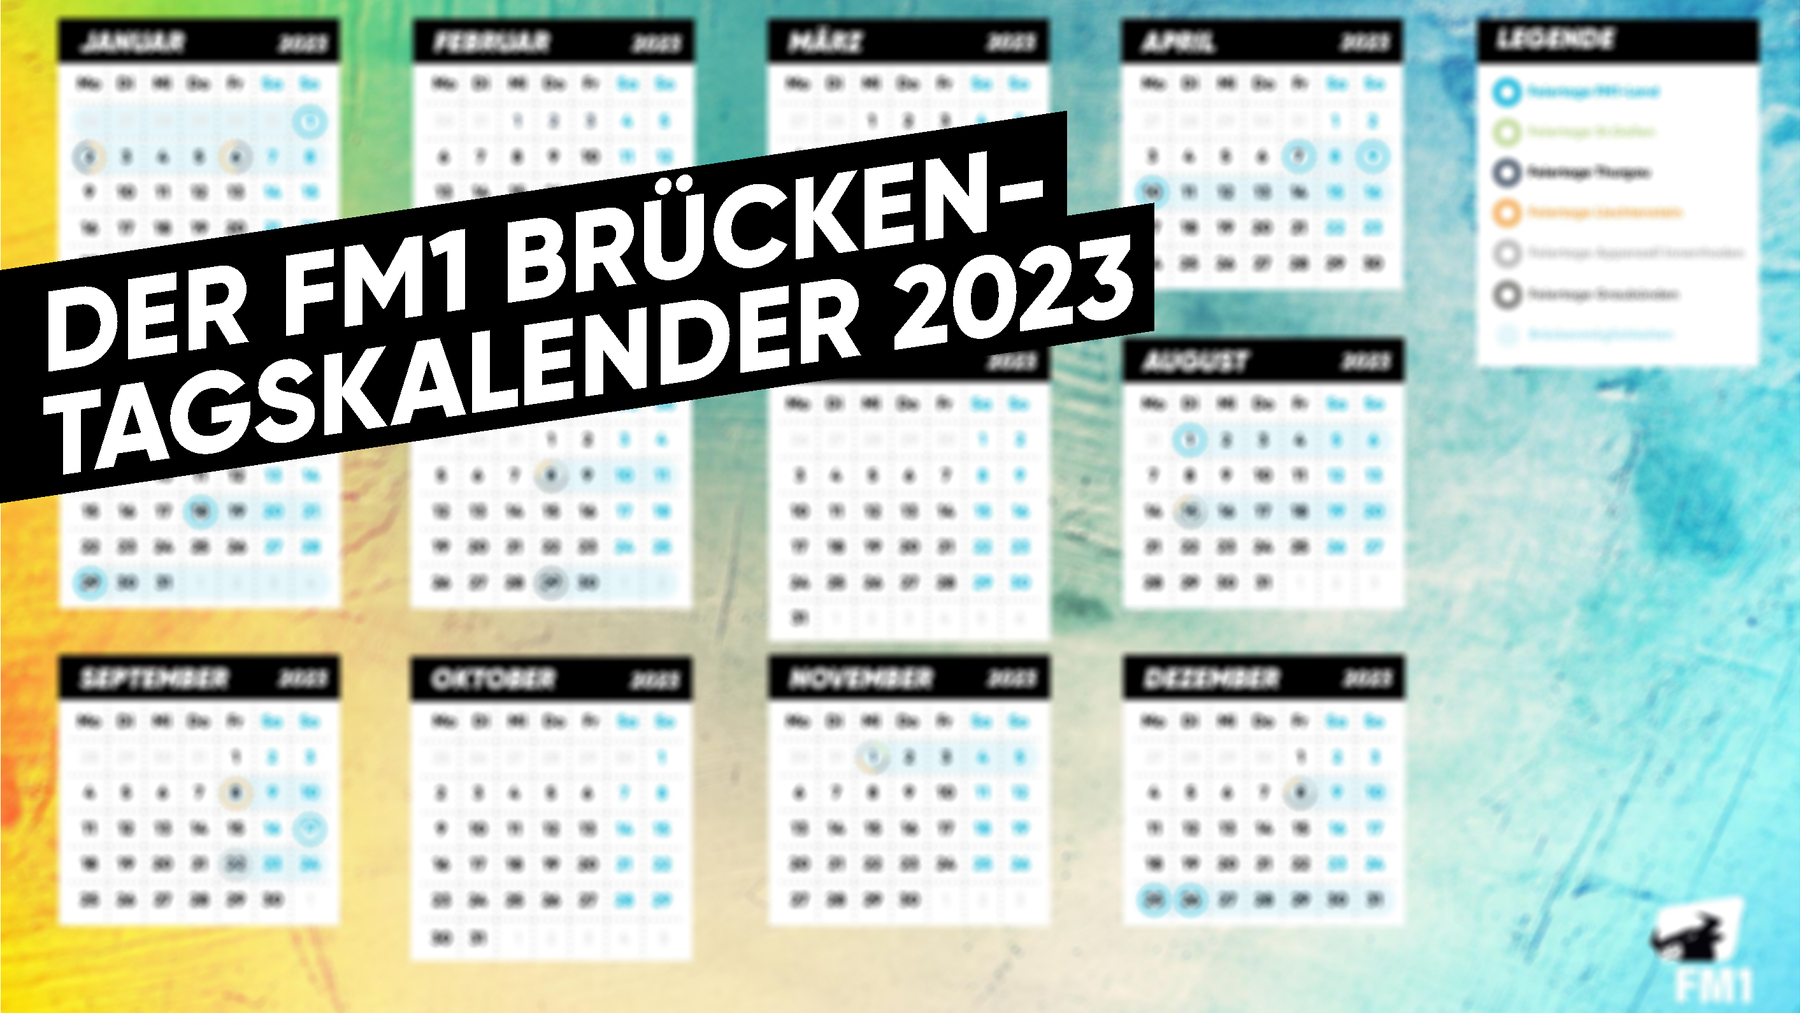 Der FM1 Brückentagskalender 2023